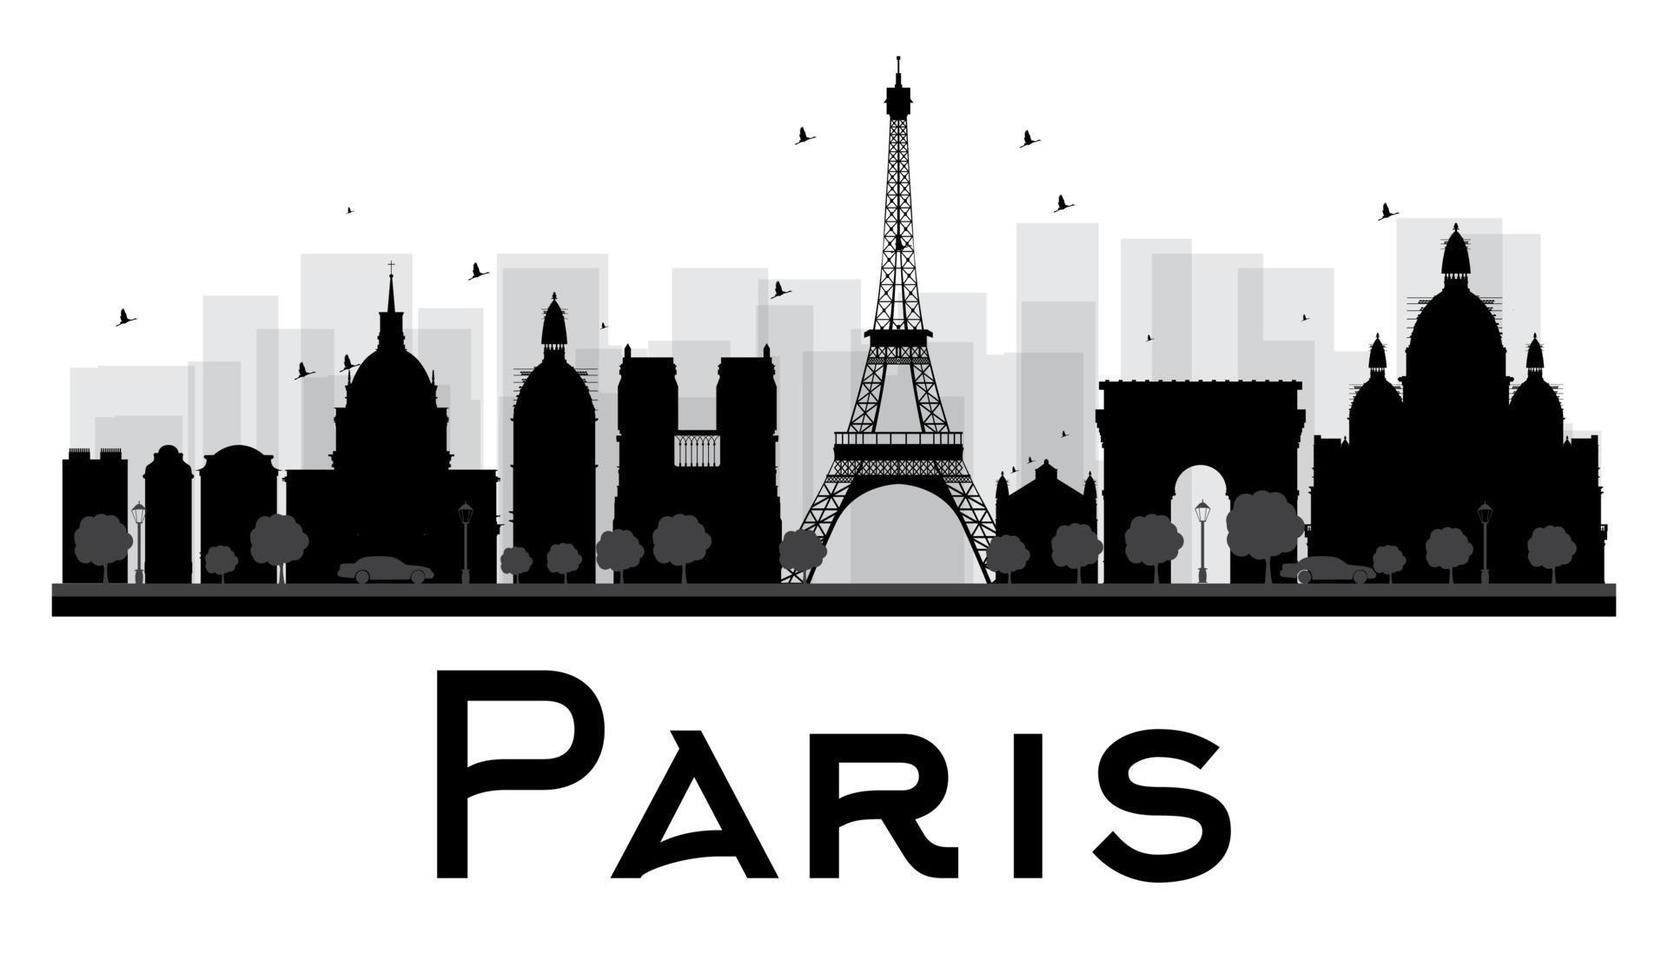 Parijs stad skyline zwart-wit silhouet. vector